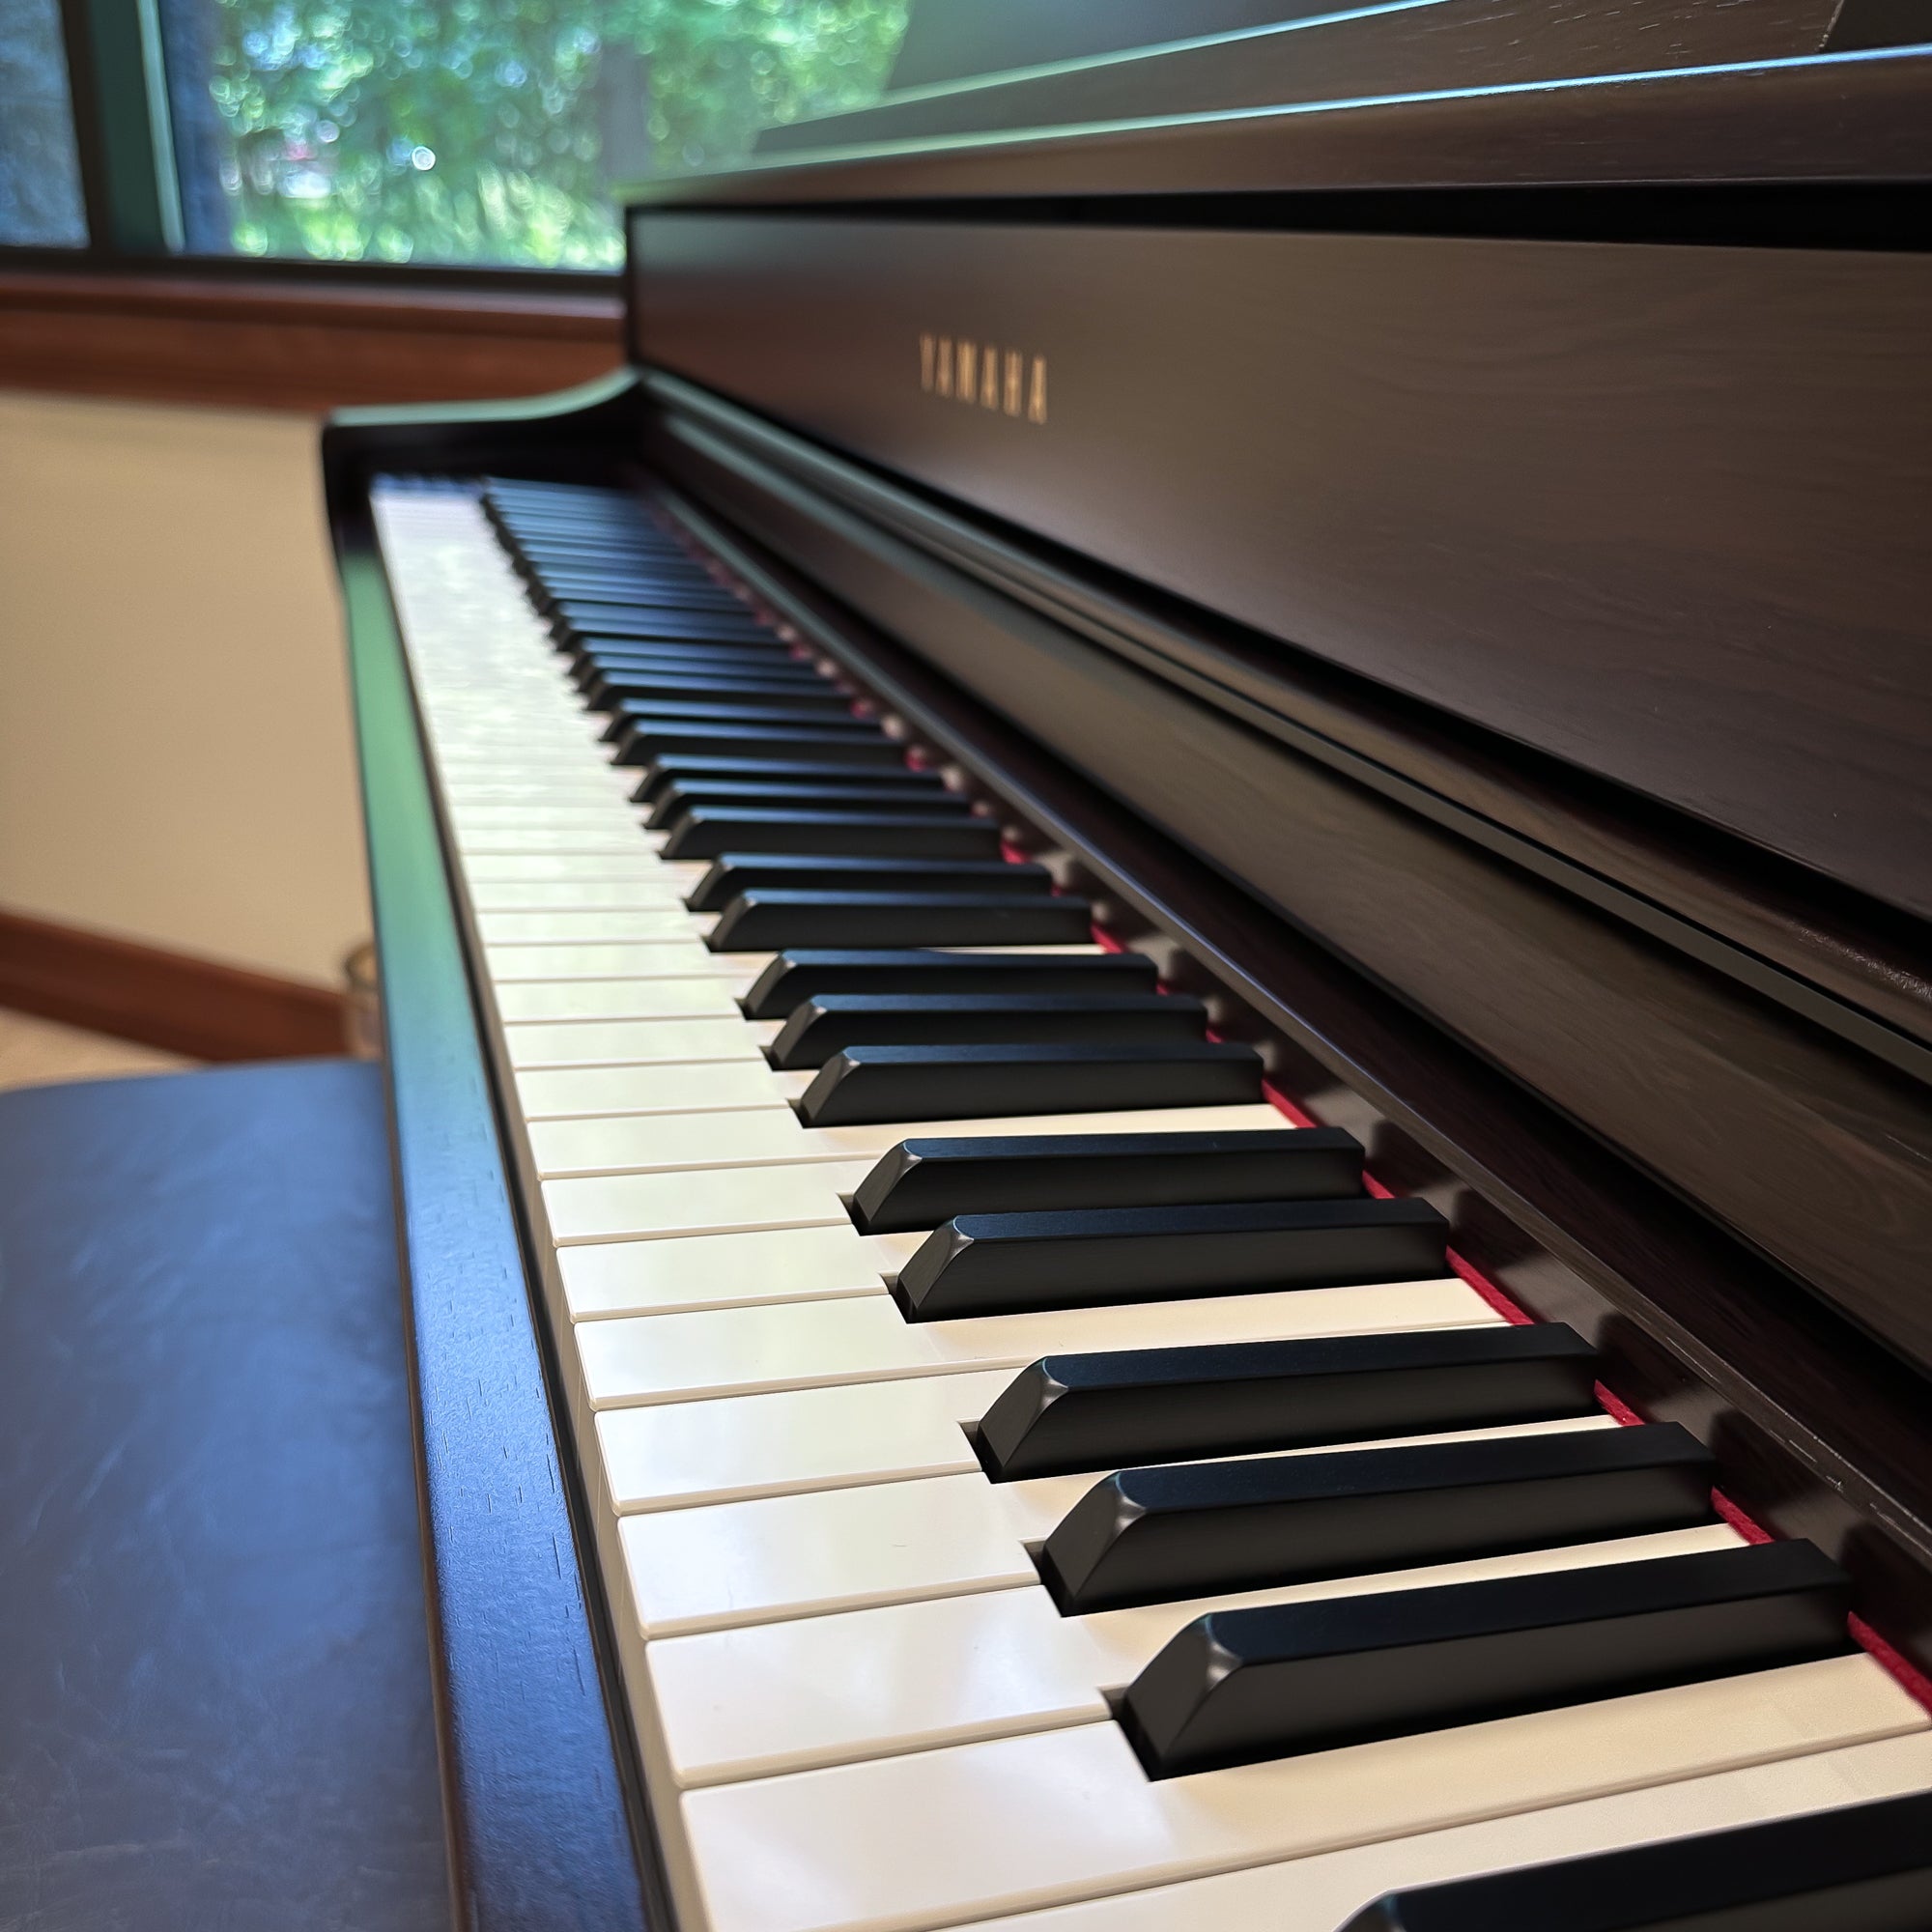 Yamaha Clavinova CLP-745 Digital Piano - Rosewood – Kraft Music